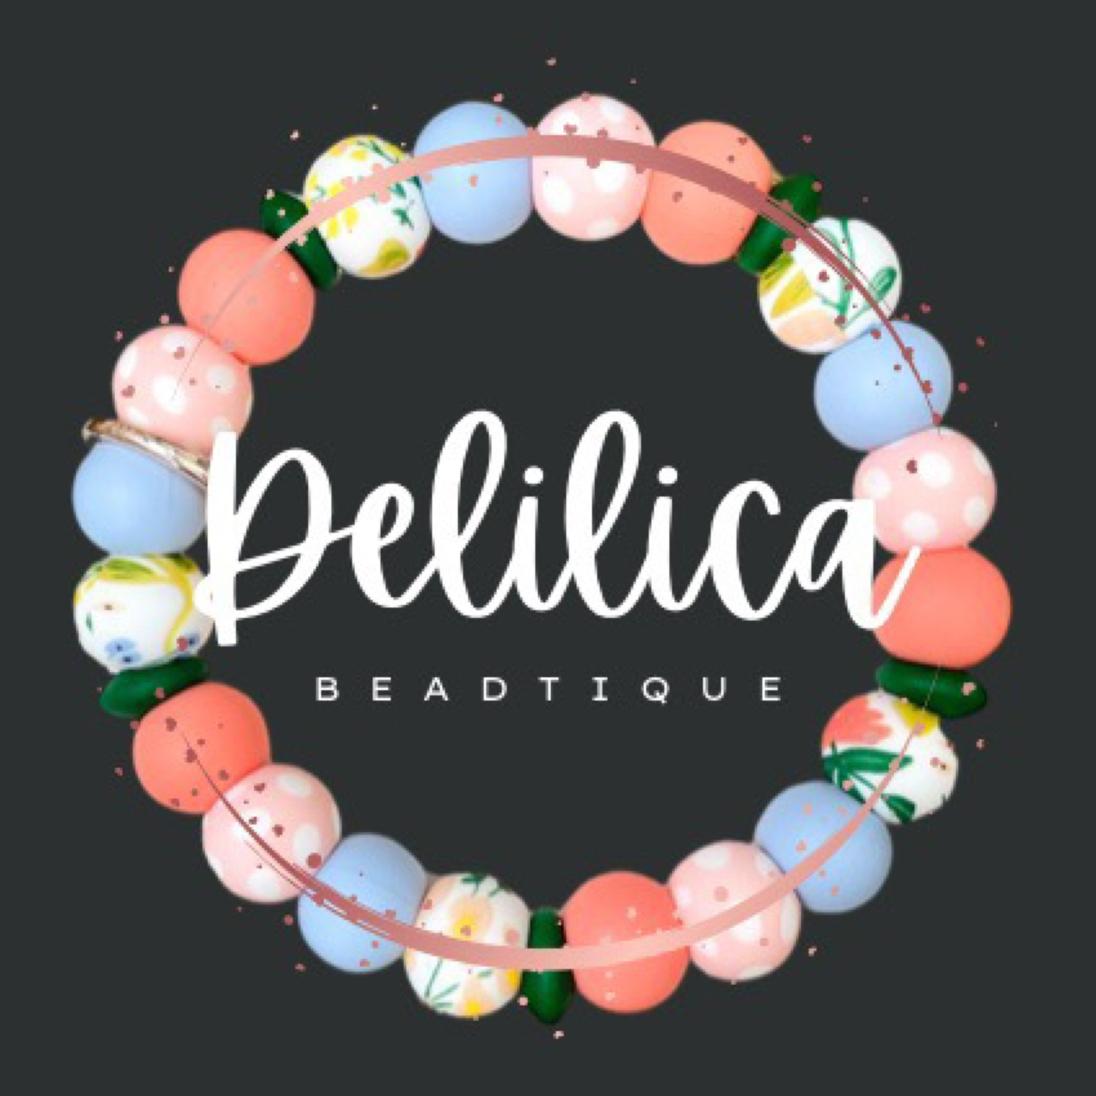 Delilica's images